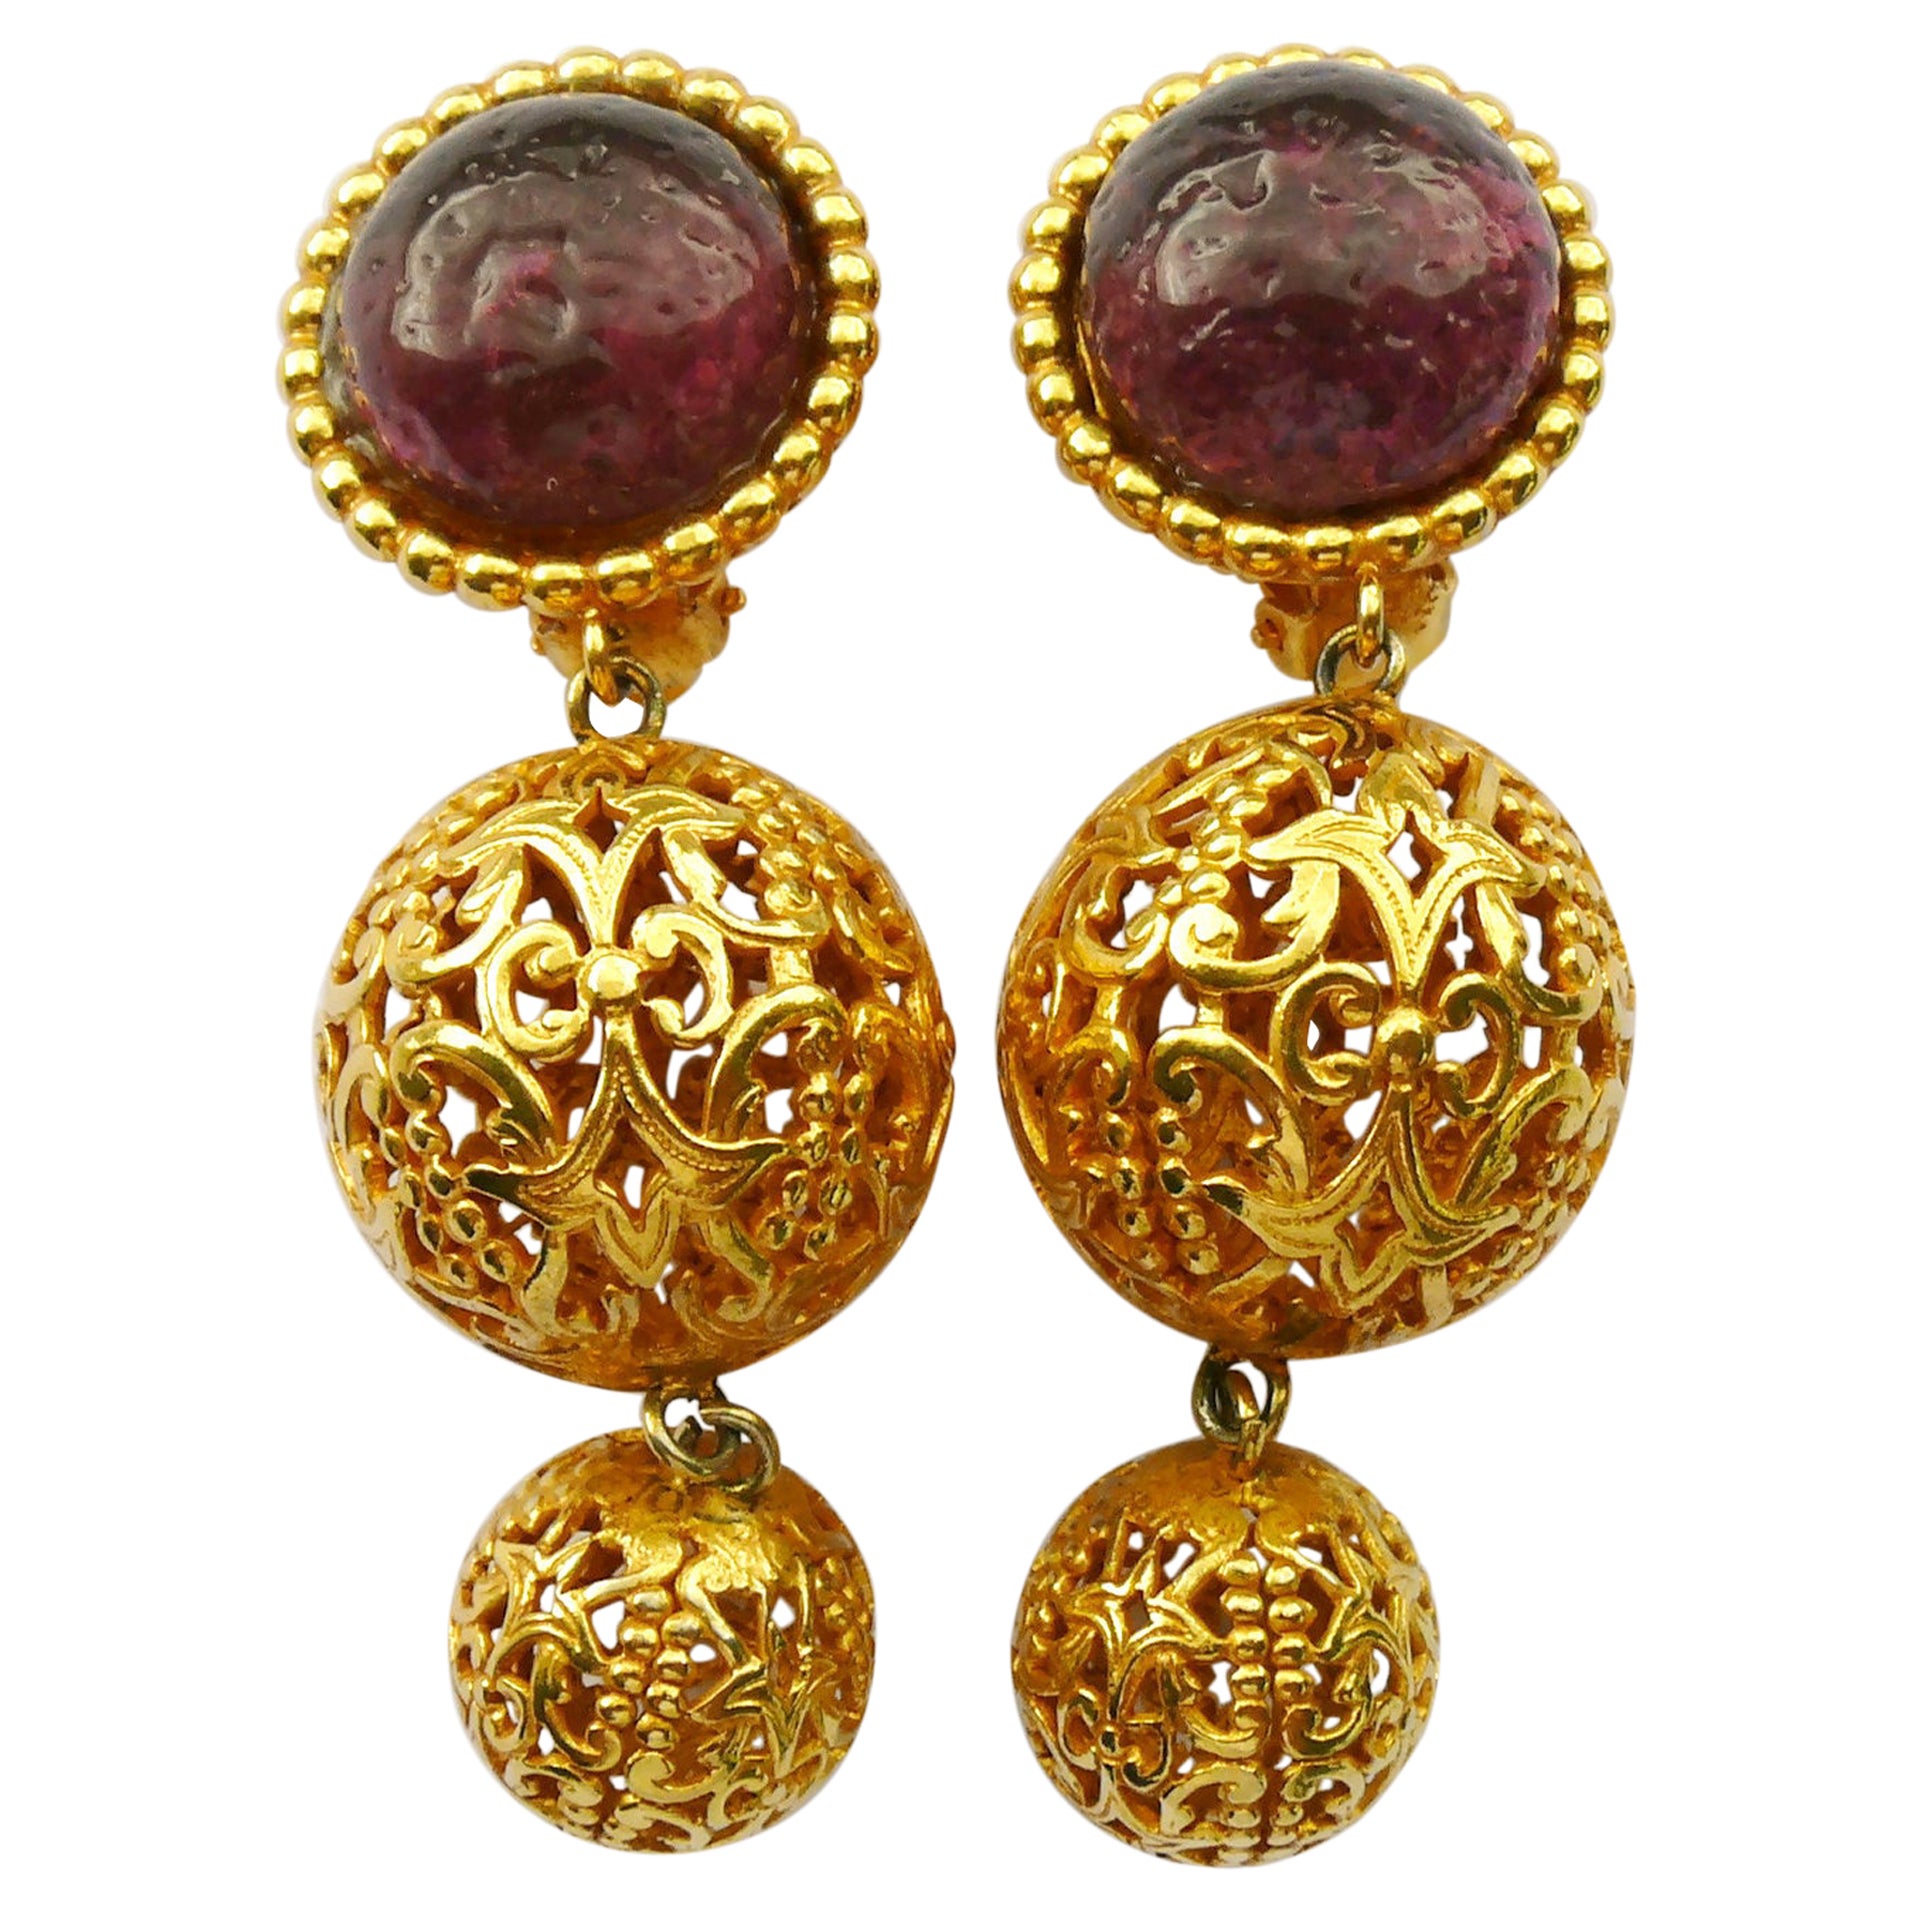 Dominique Aurientis Vintage Gold Toned Filigree Balls Dangling Earrings